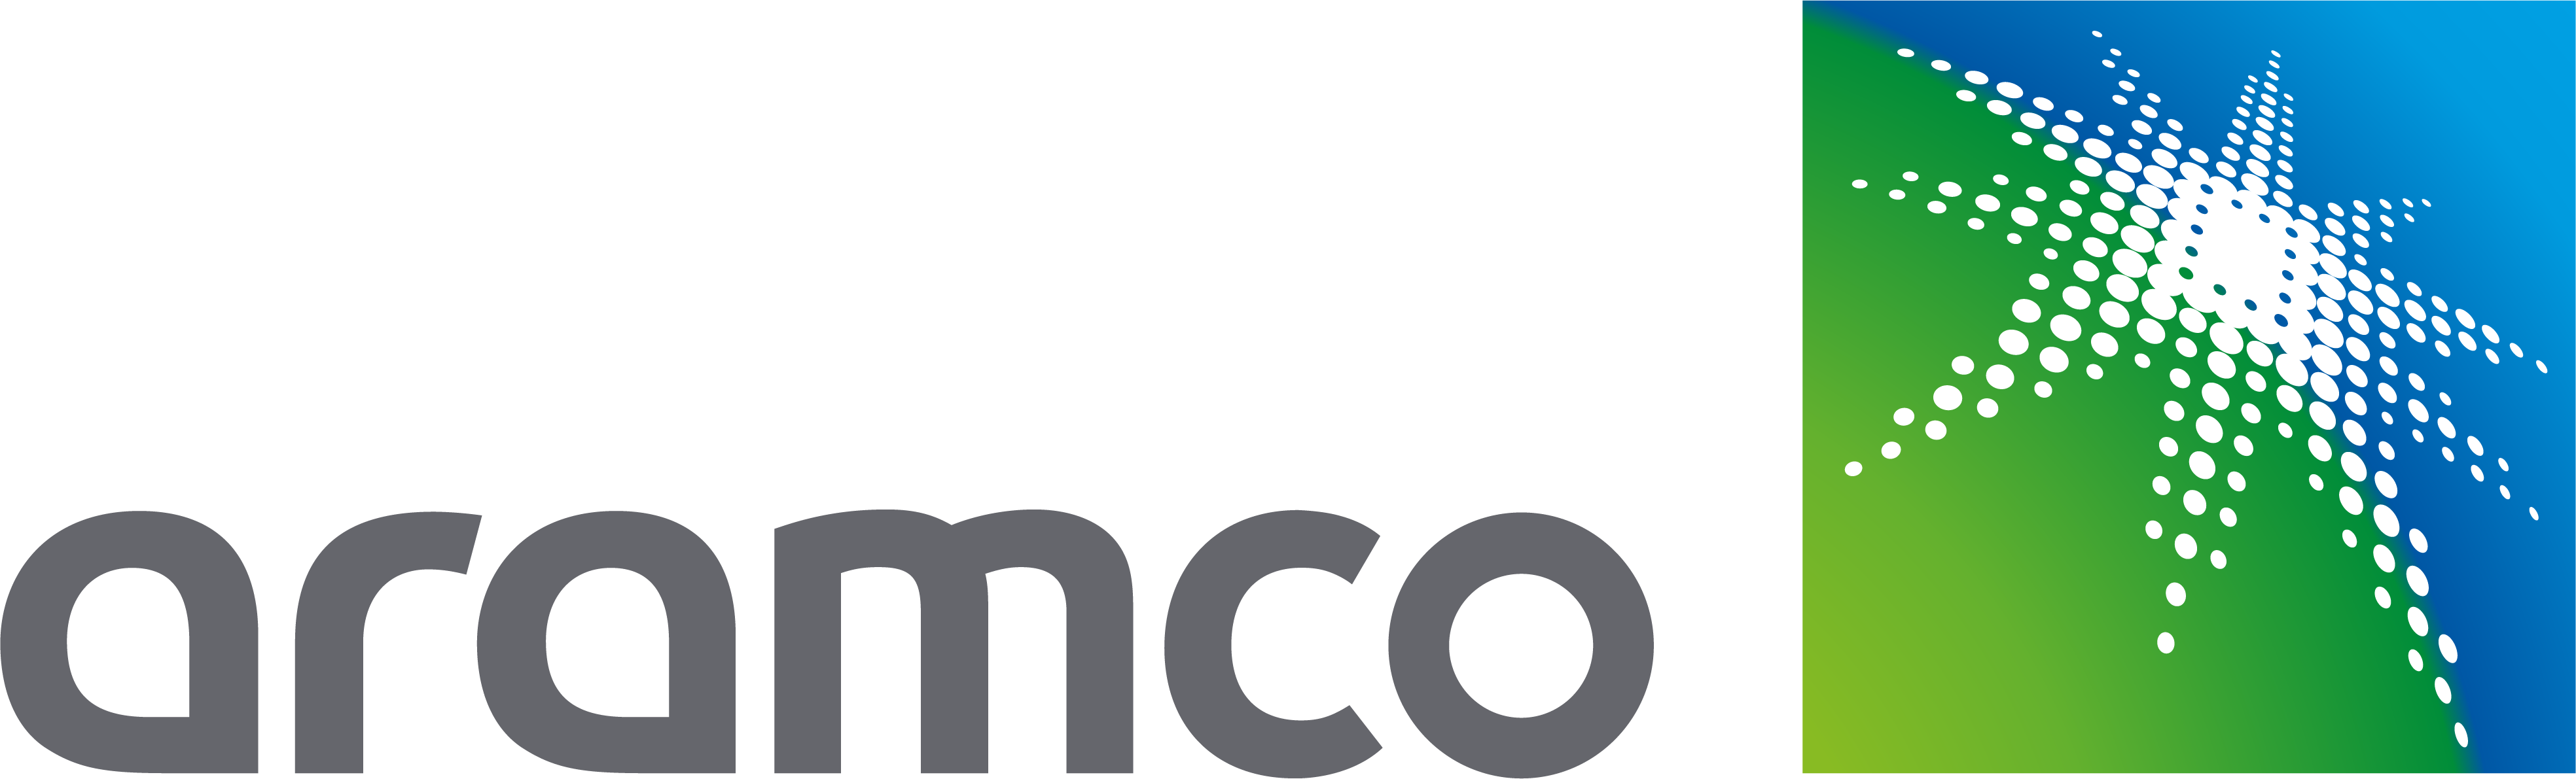 Aramco Logo Markt Positive RGB